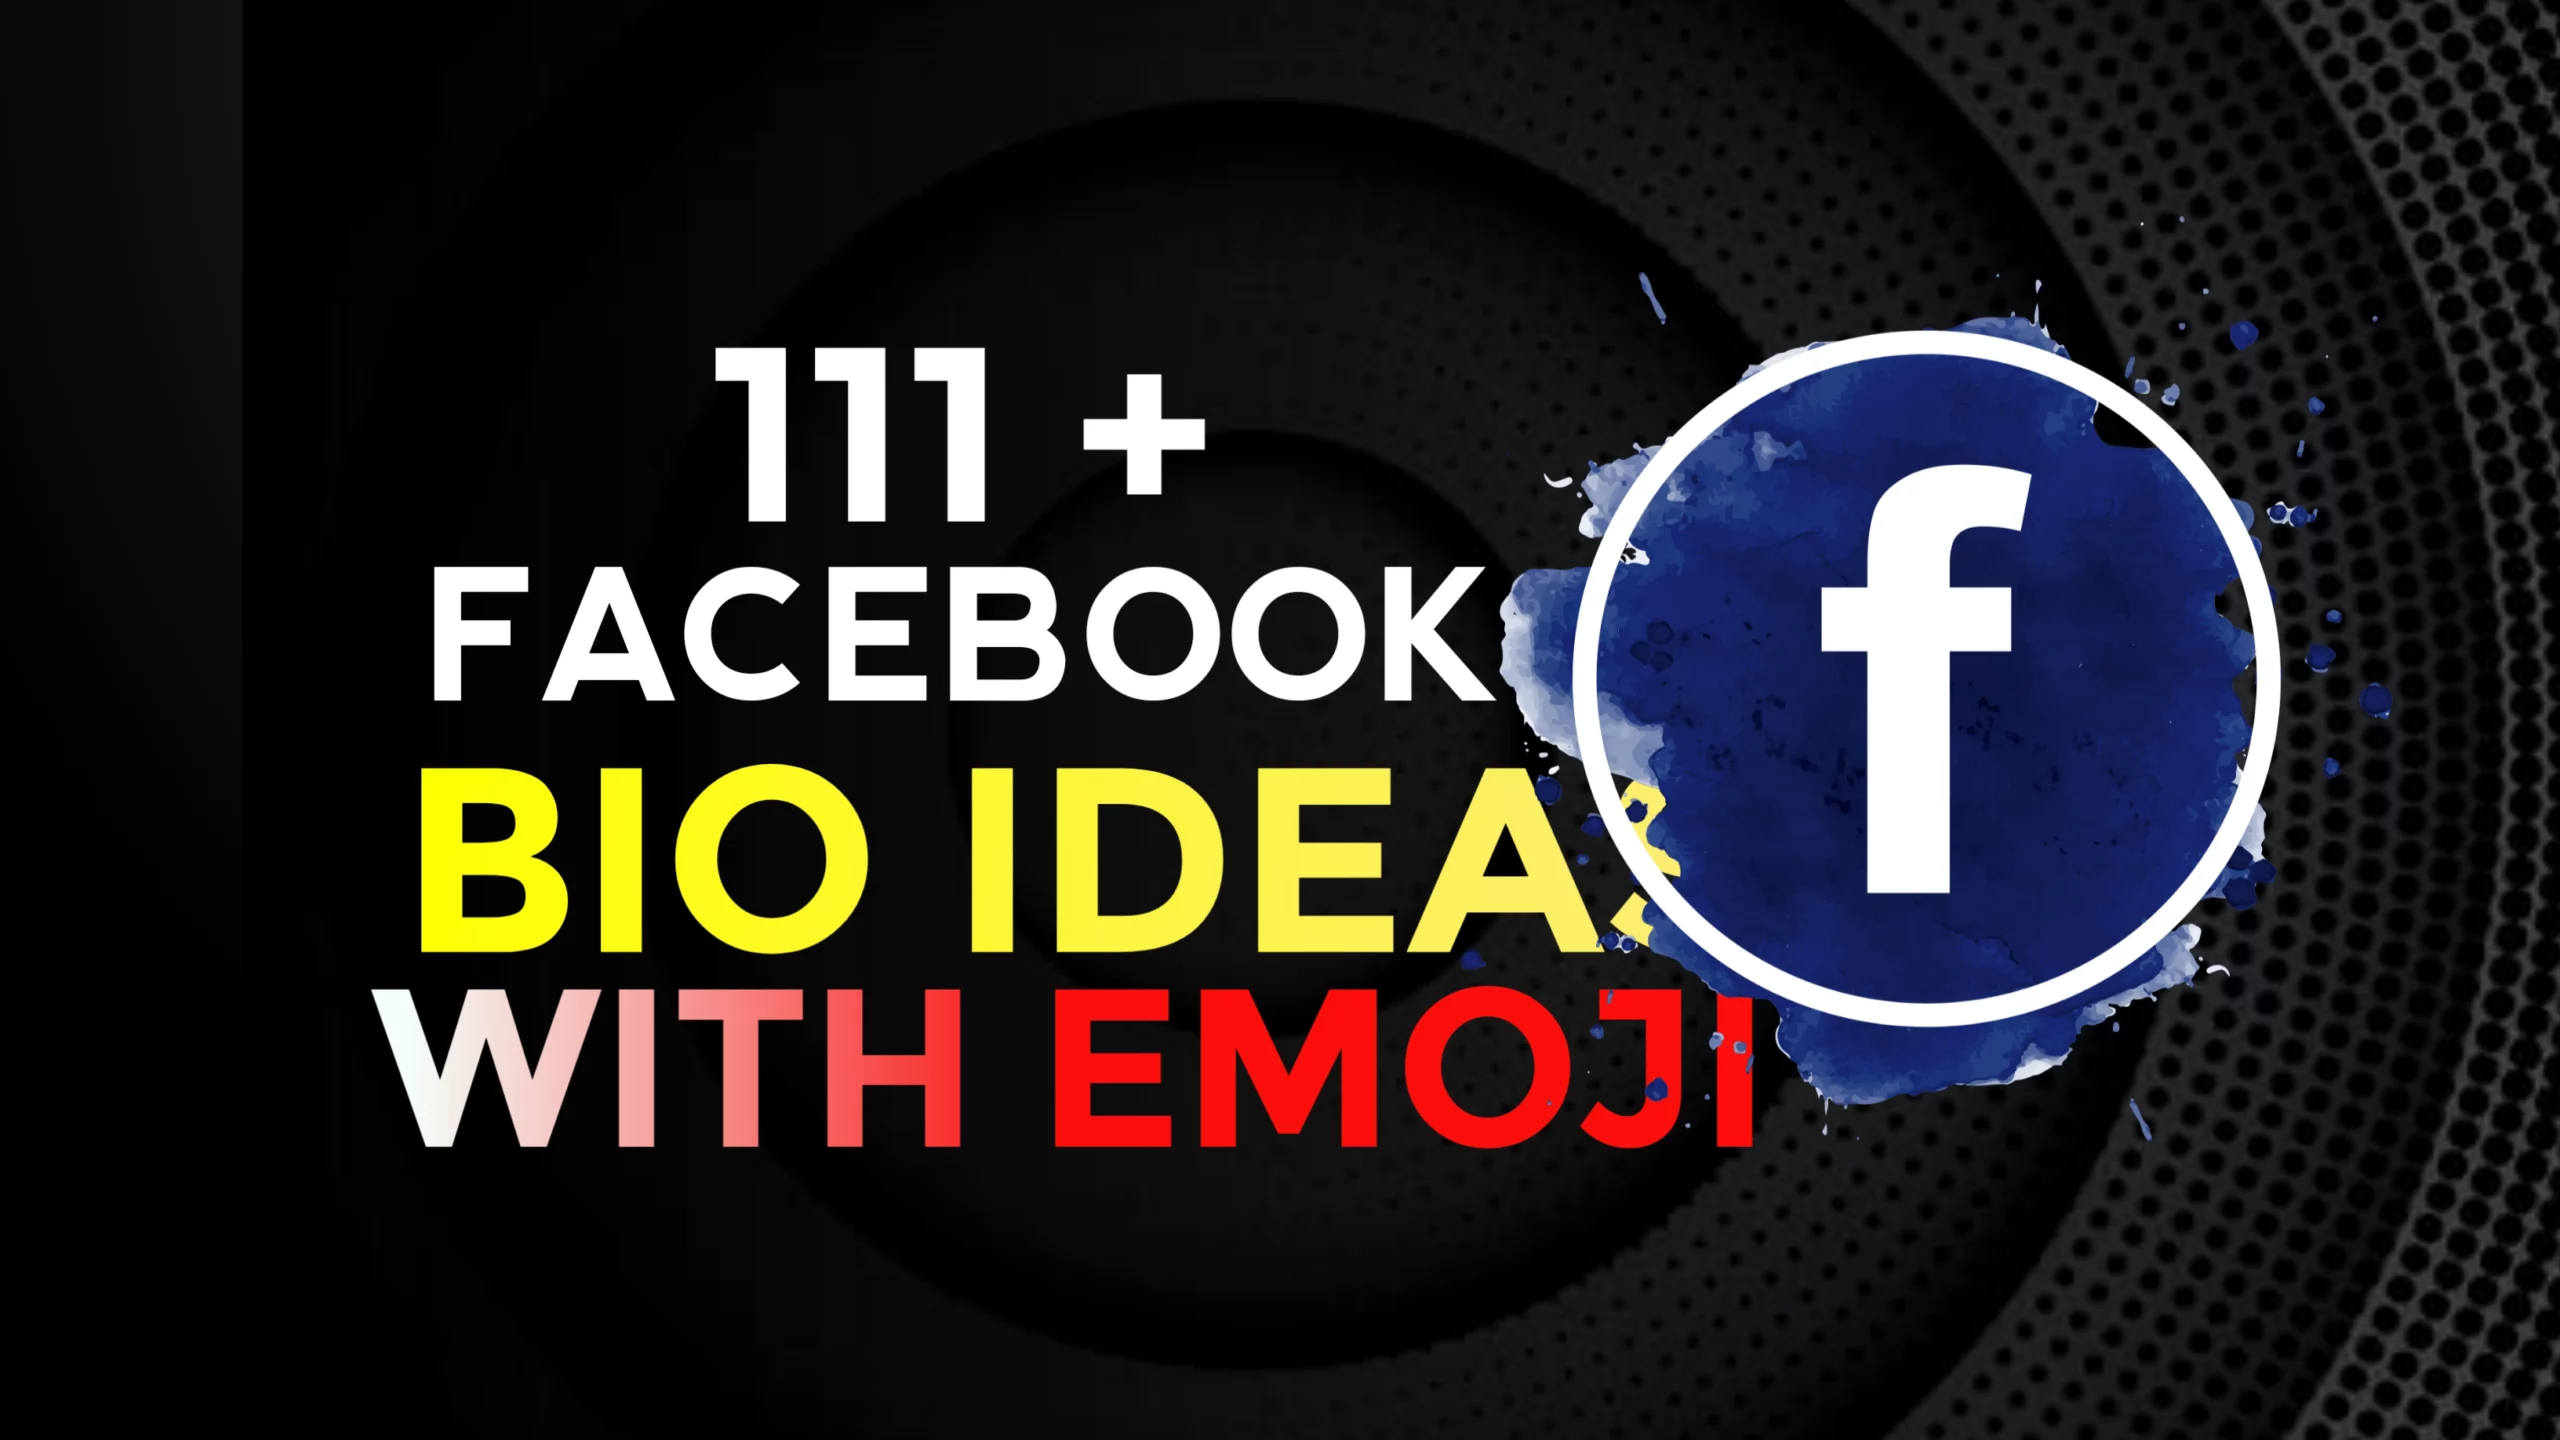 111+ Facebook Bio Ideas With Emoji For Girl & Boy